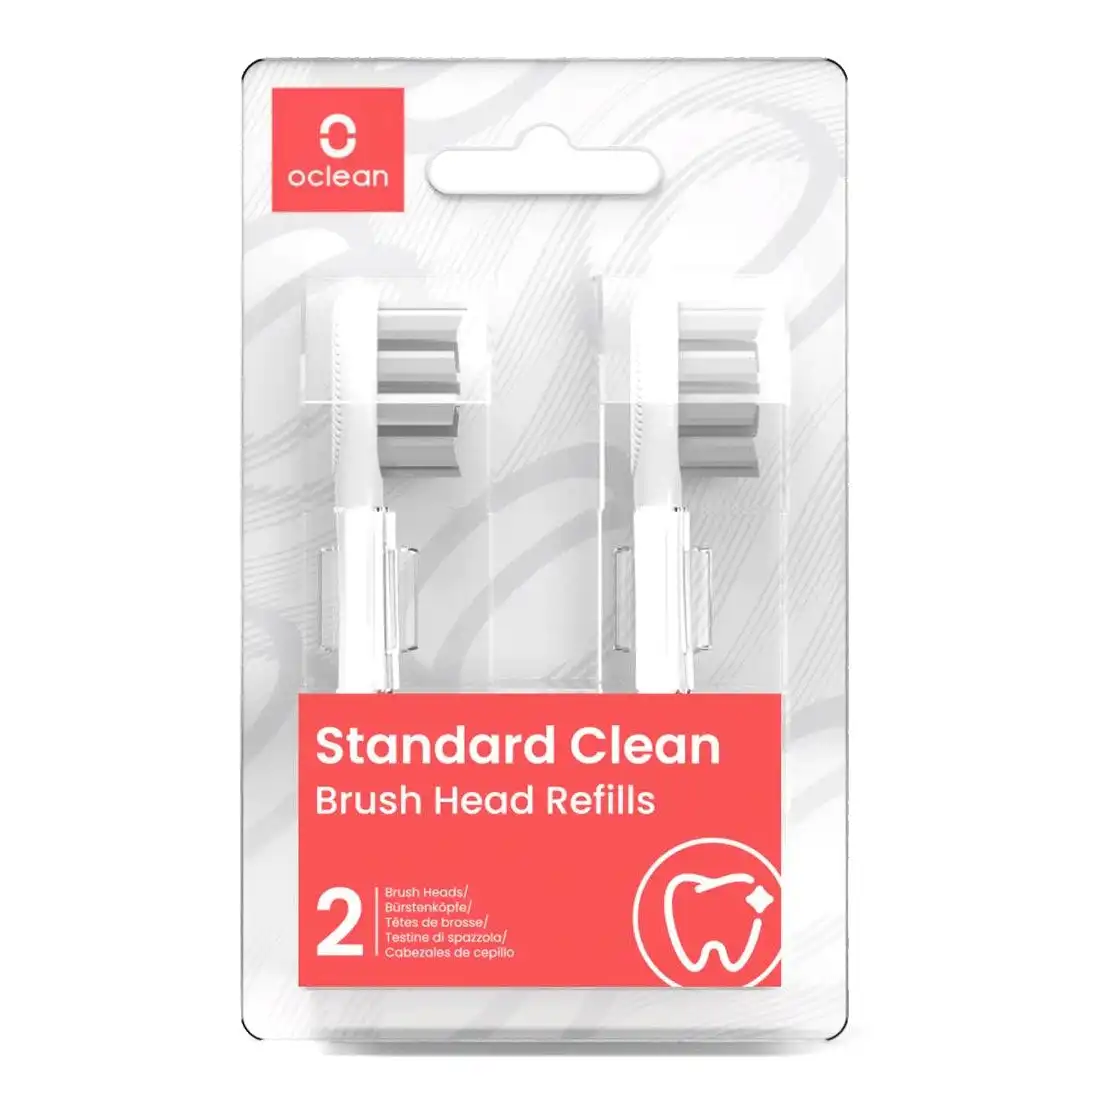 Oclean Standard Clean Brush Head 2 Pack - White